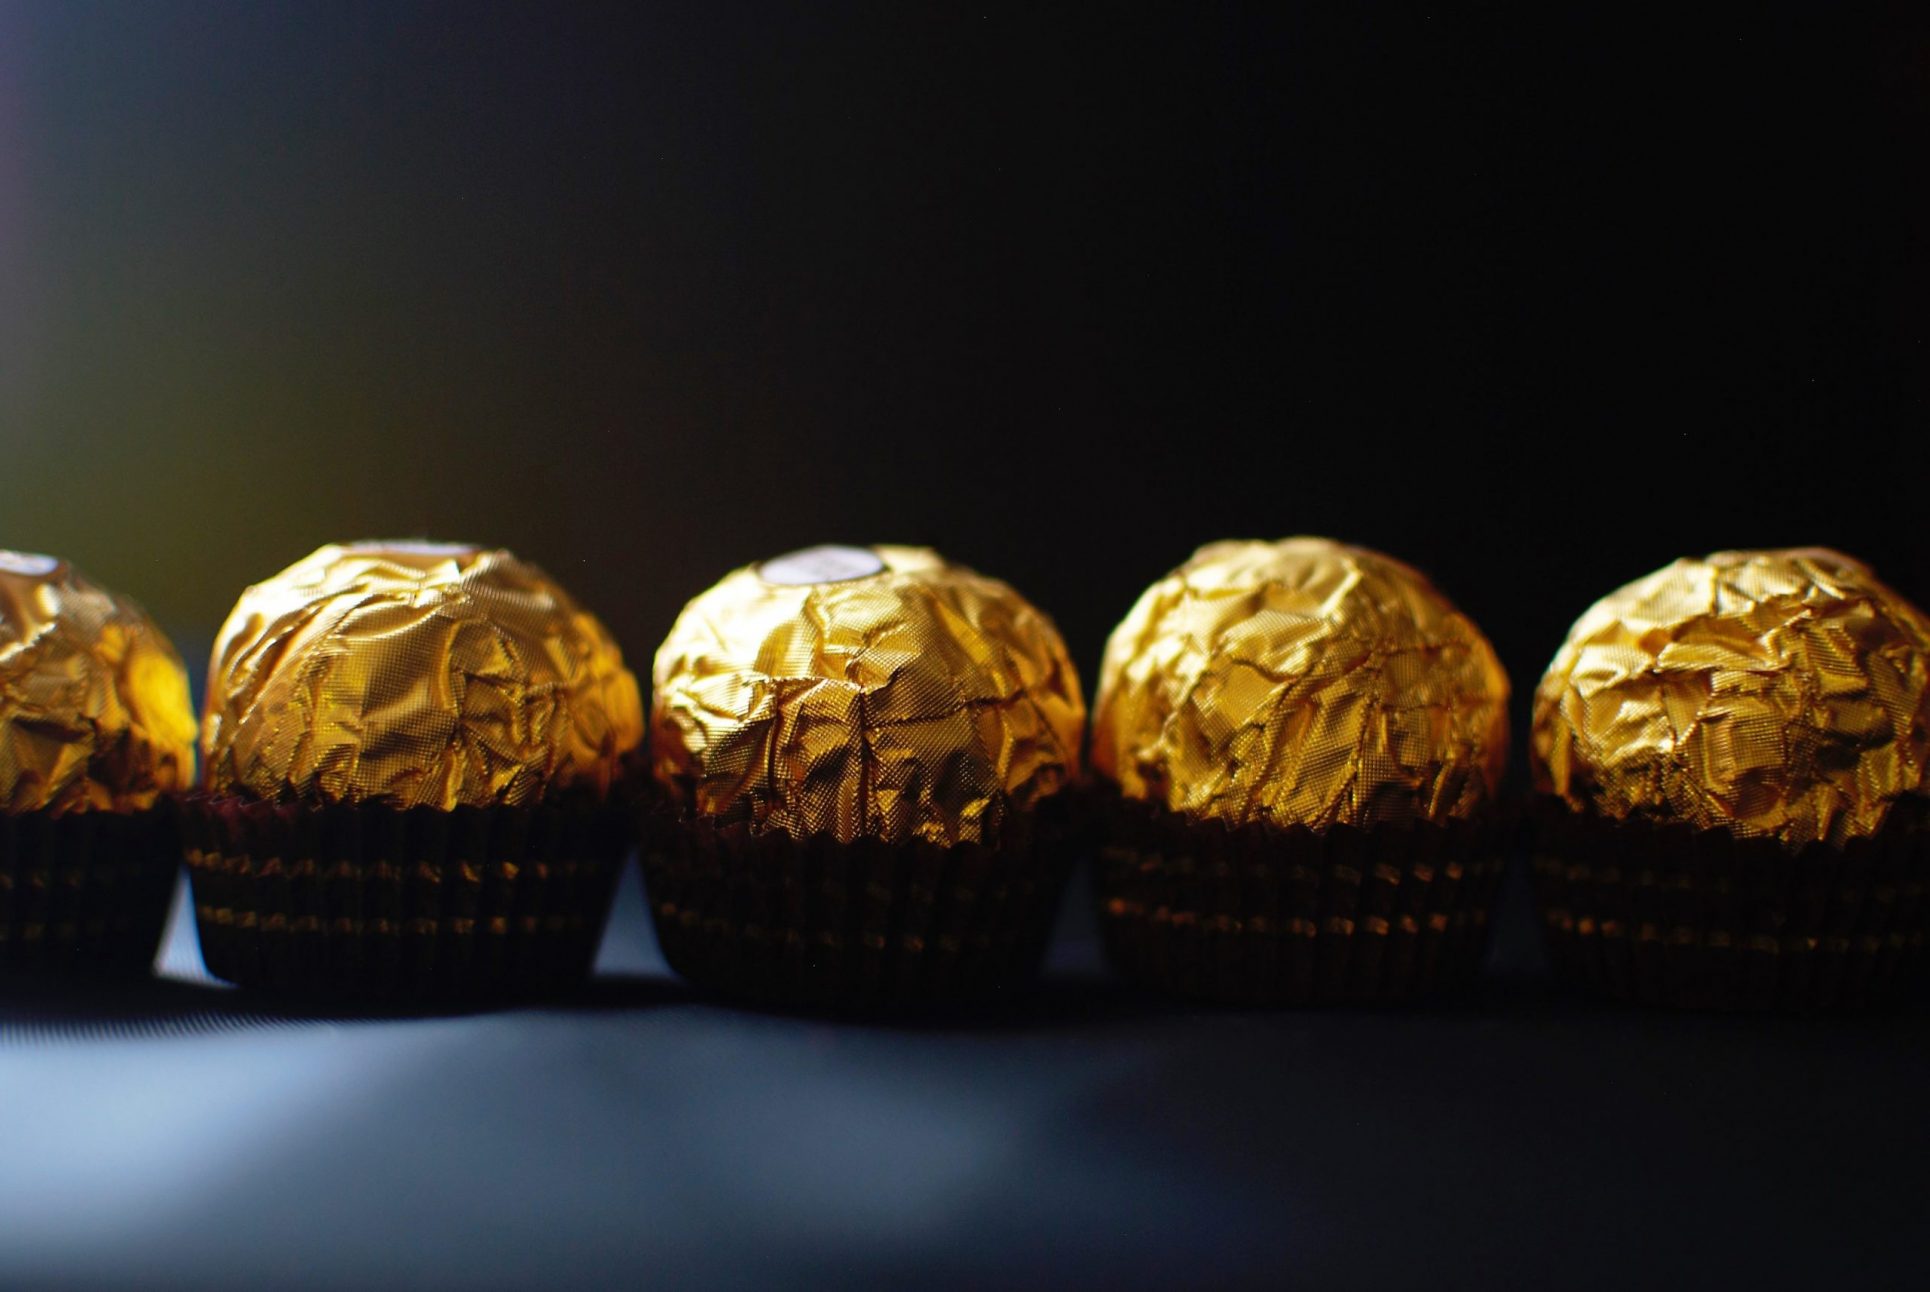 Engaño vía WhatsApp: Ferrero Rocher no está regalando cajas de chocolate